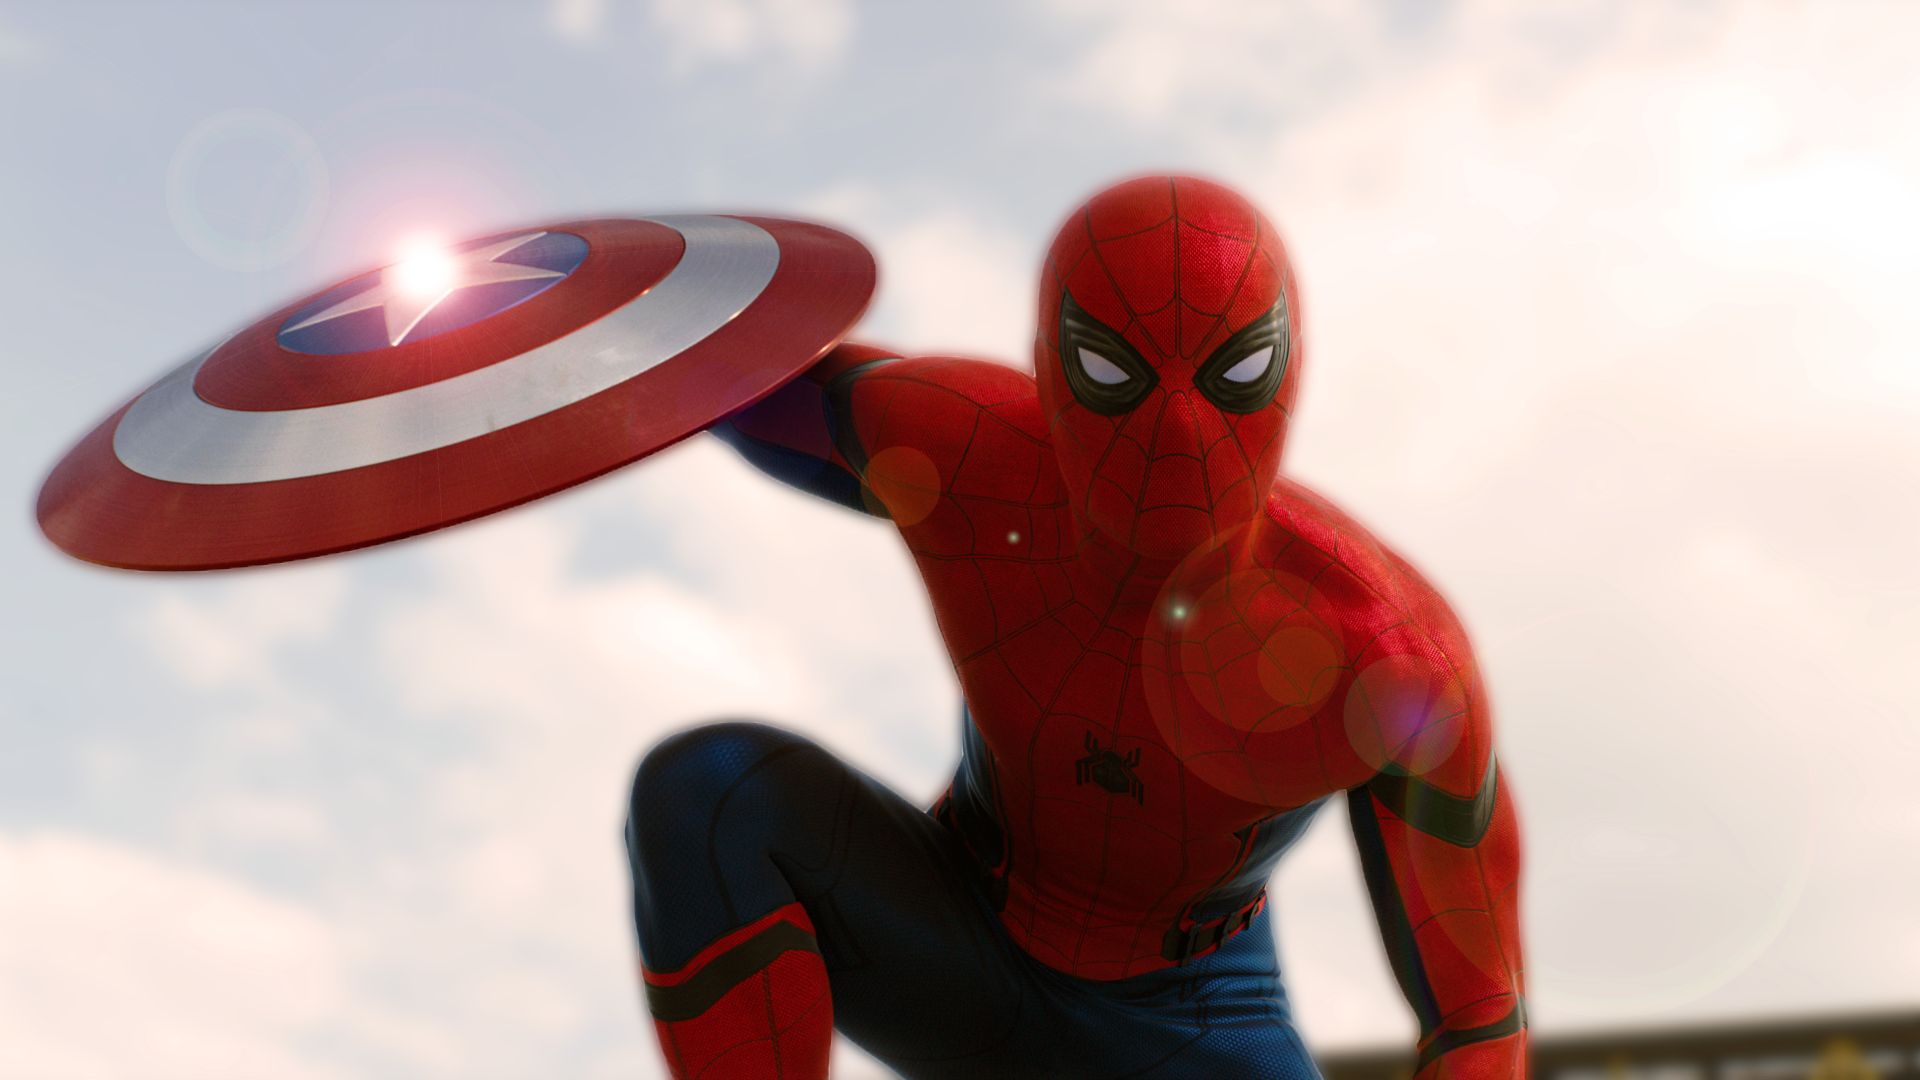 Descarga gratis la imagen Películas, Capitan América, Hombre Araña, Capitán América: Civil War en el escritorio de tu PC